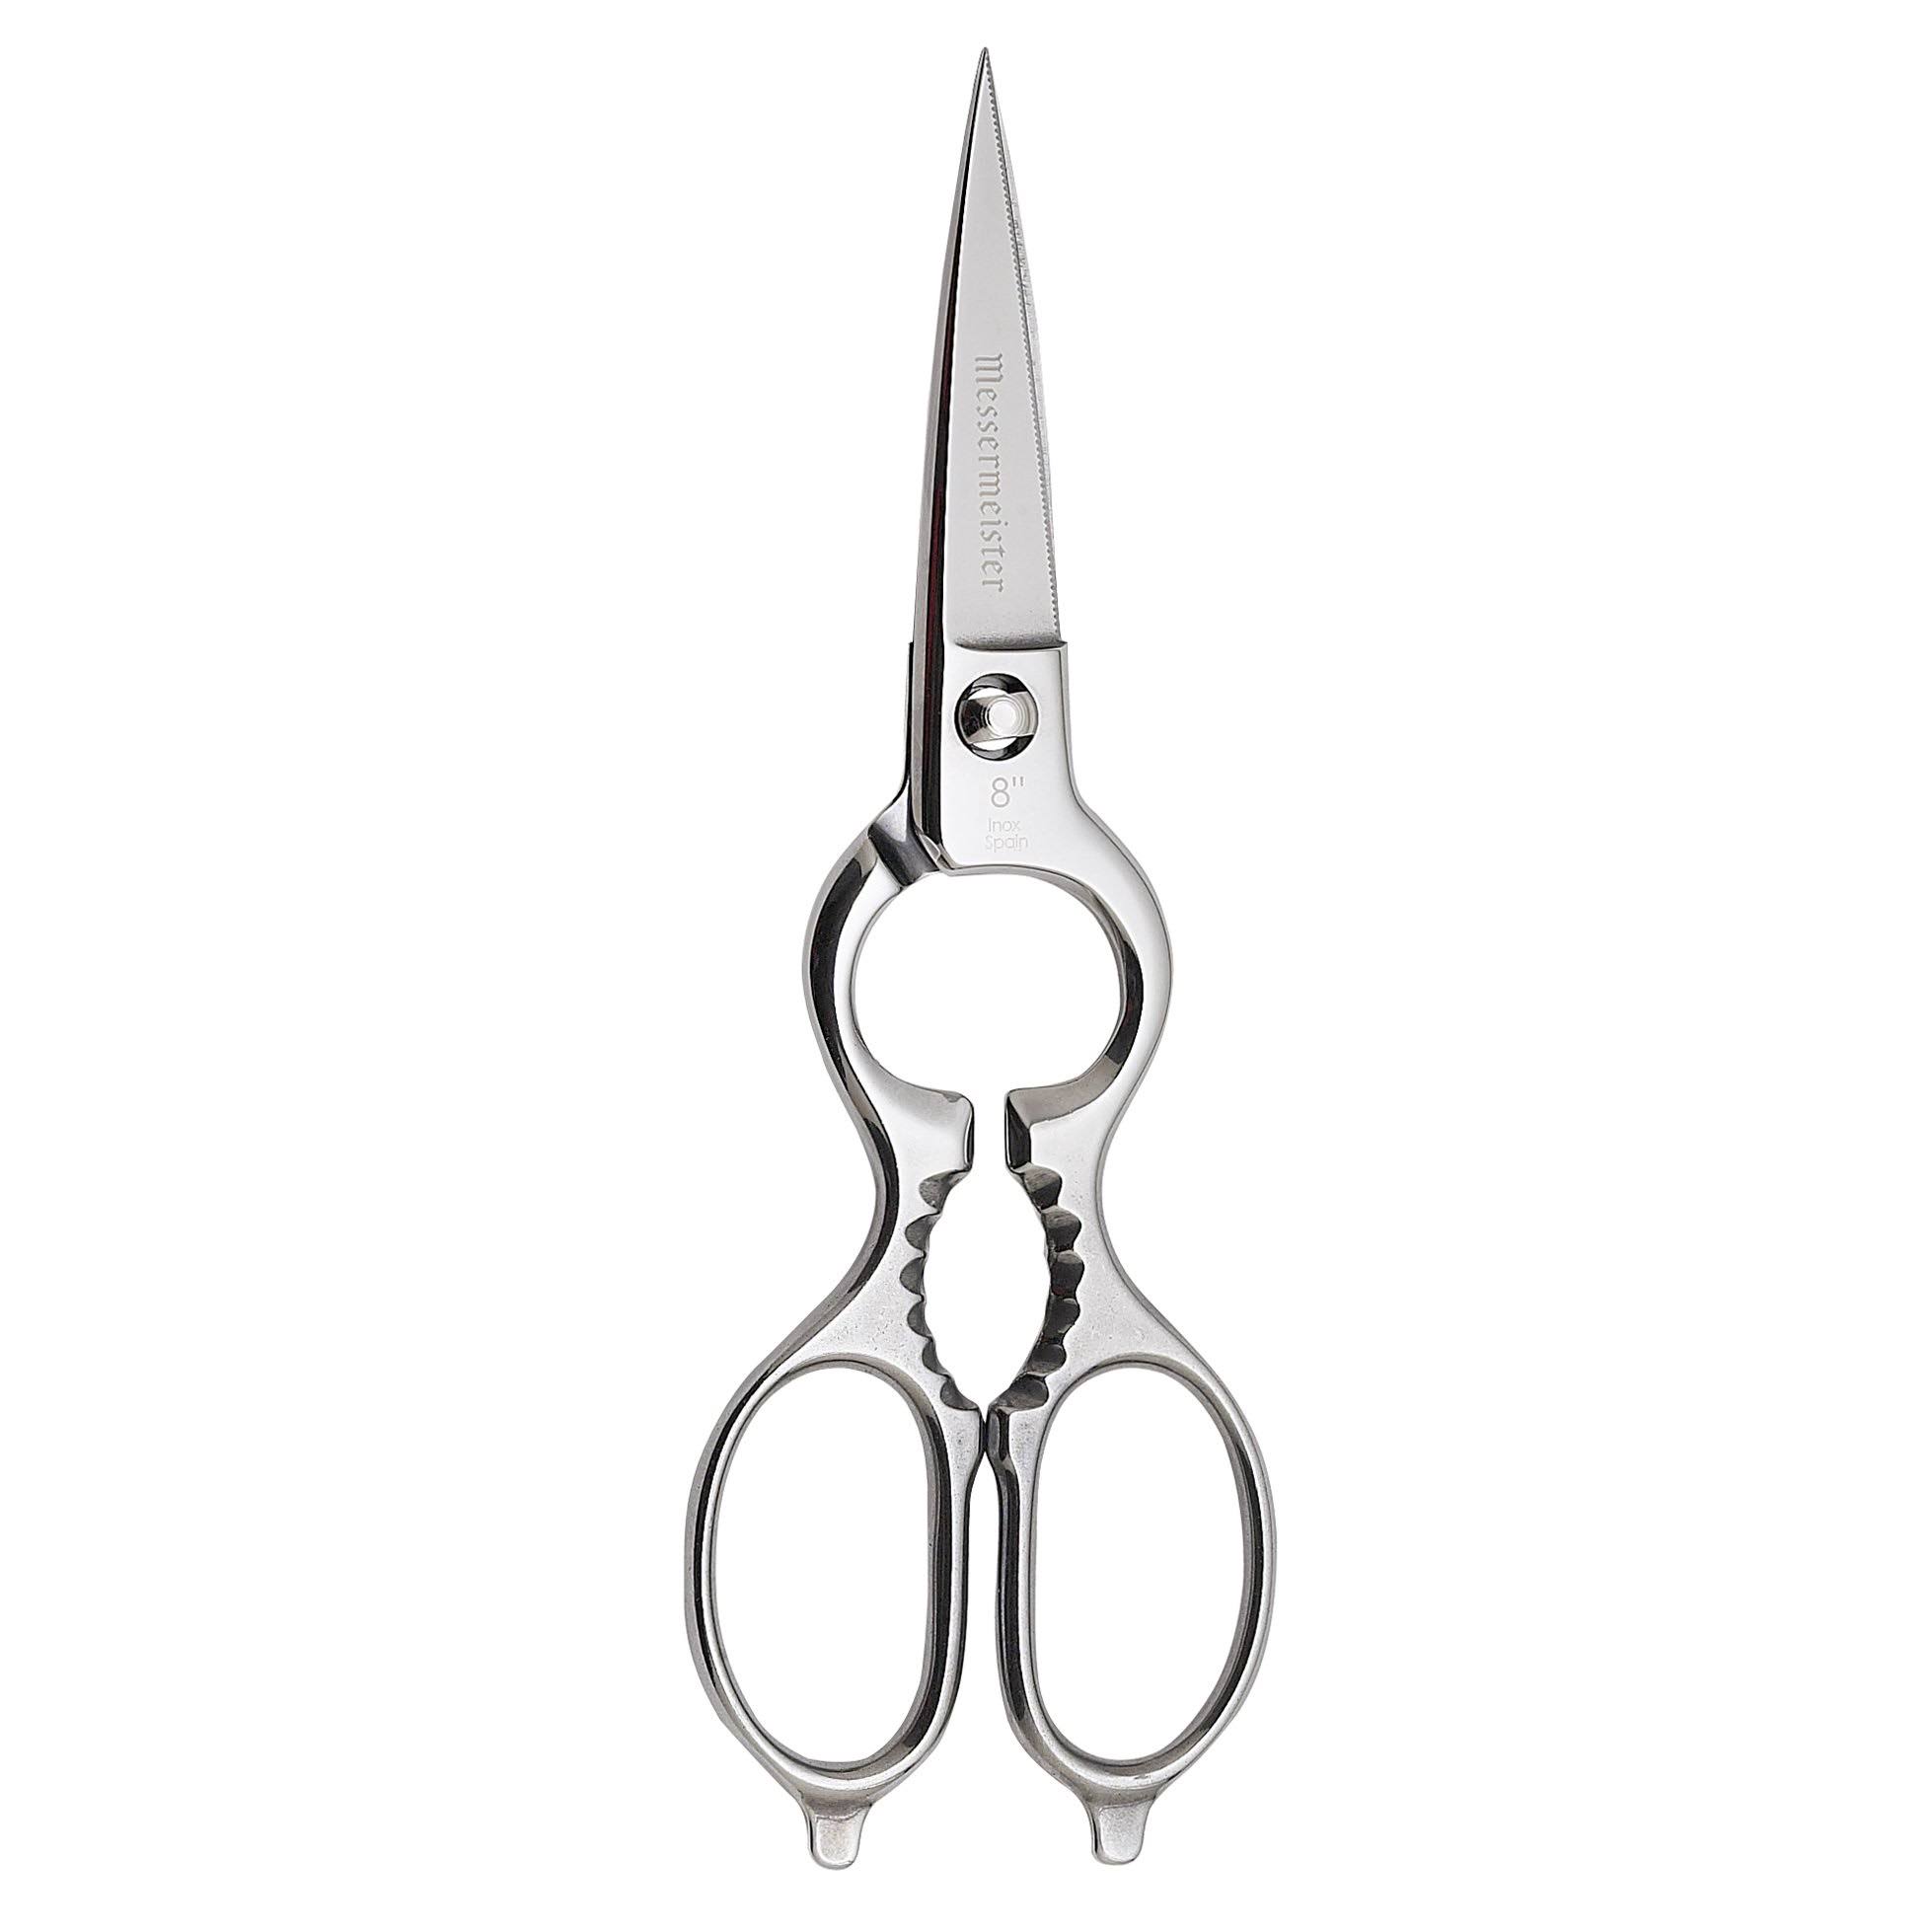 Messermeister Spanish 8 inch Take-Apart Kitchen Scissors